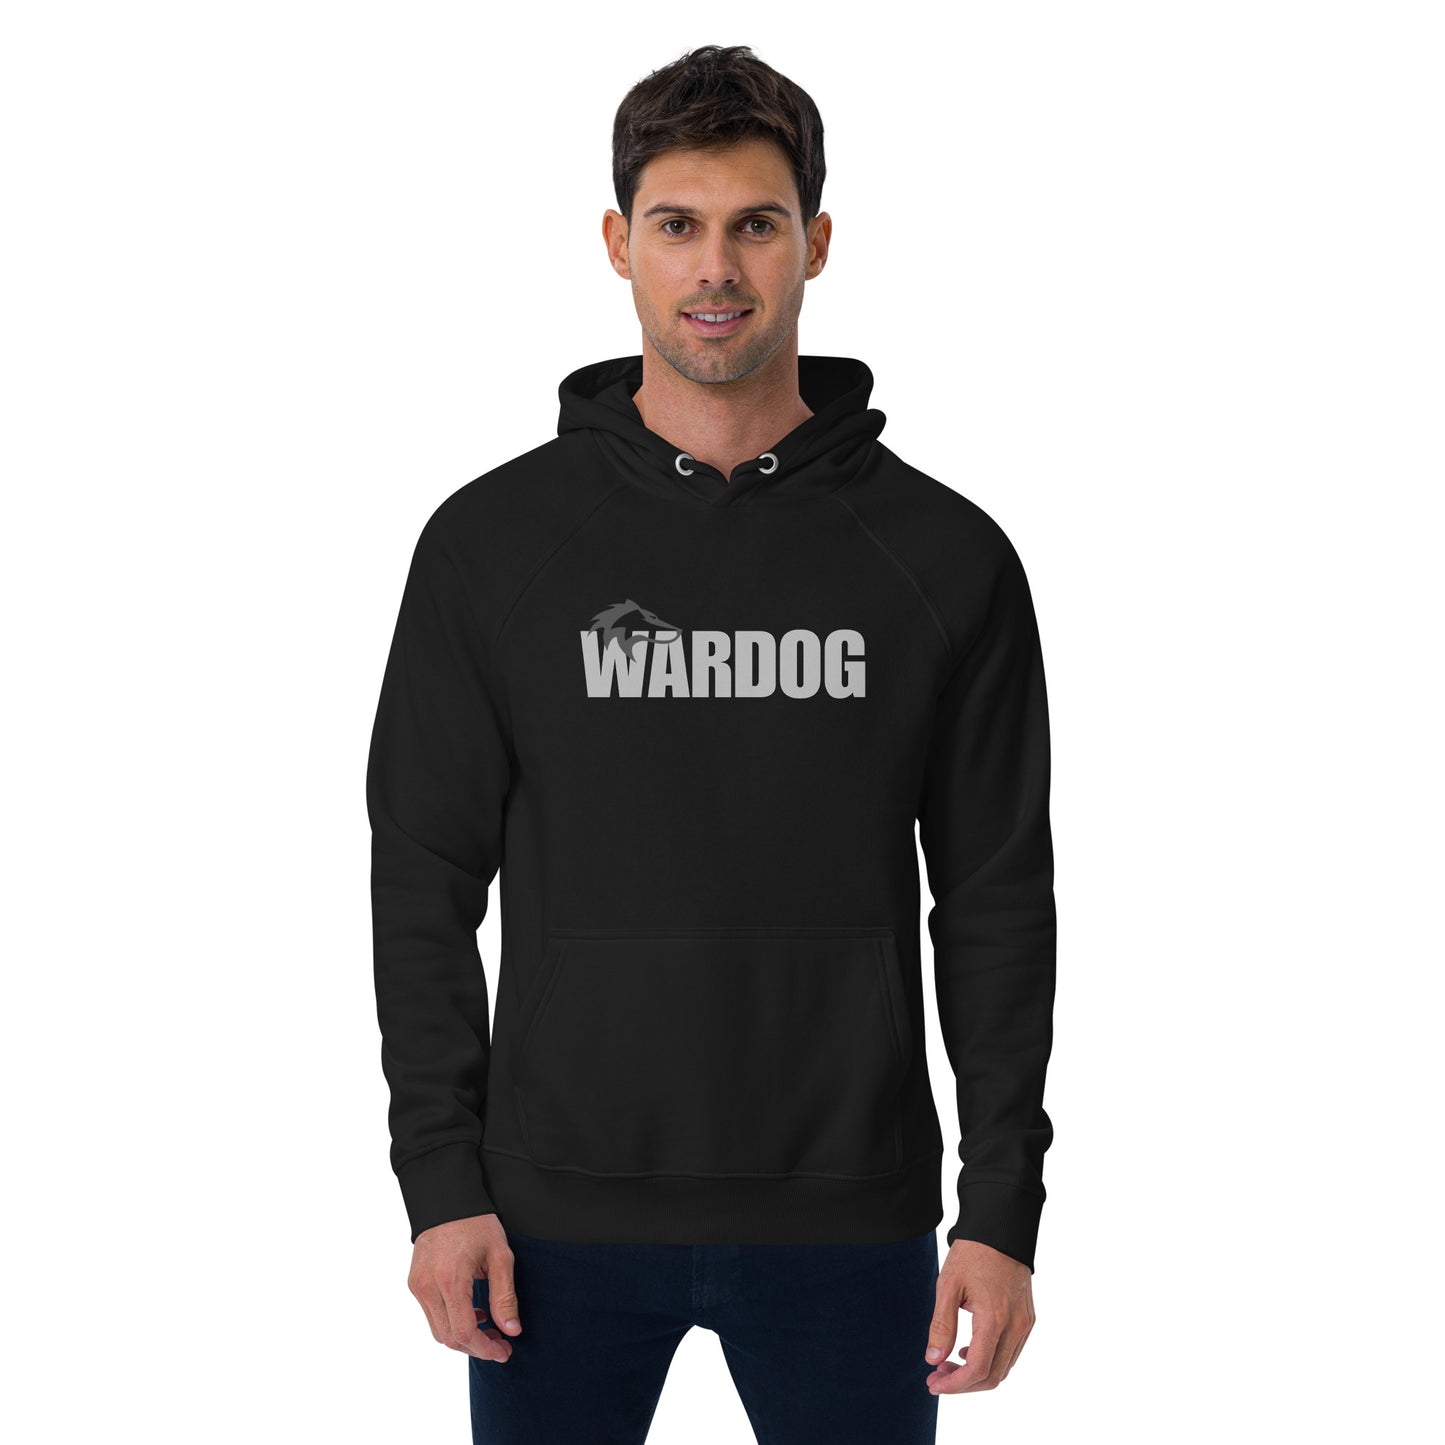 WARDOG hoodie